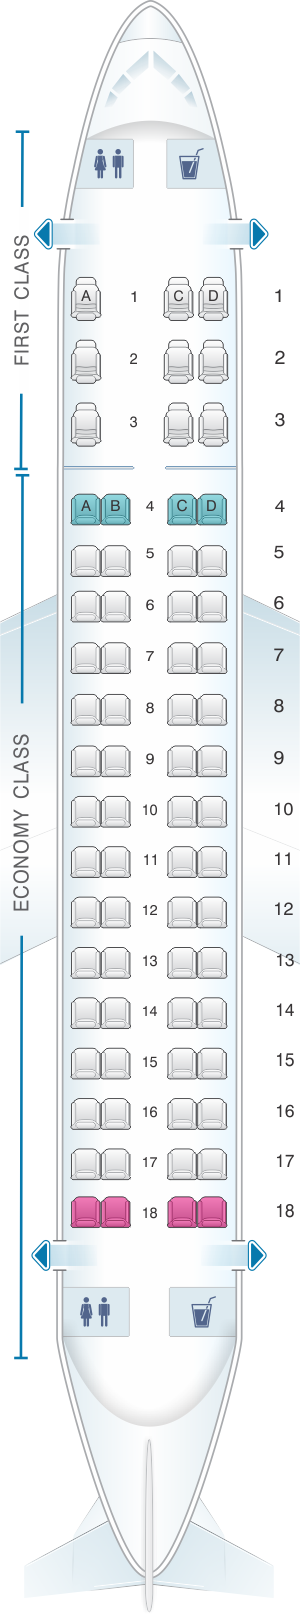 Embraer Erj 145 Seating Chart Trinity